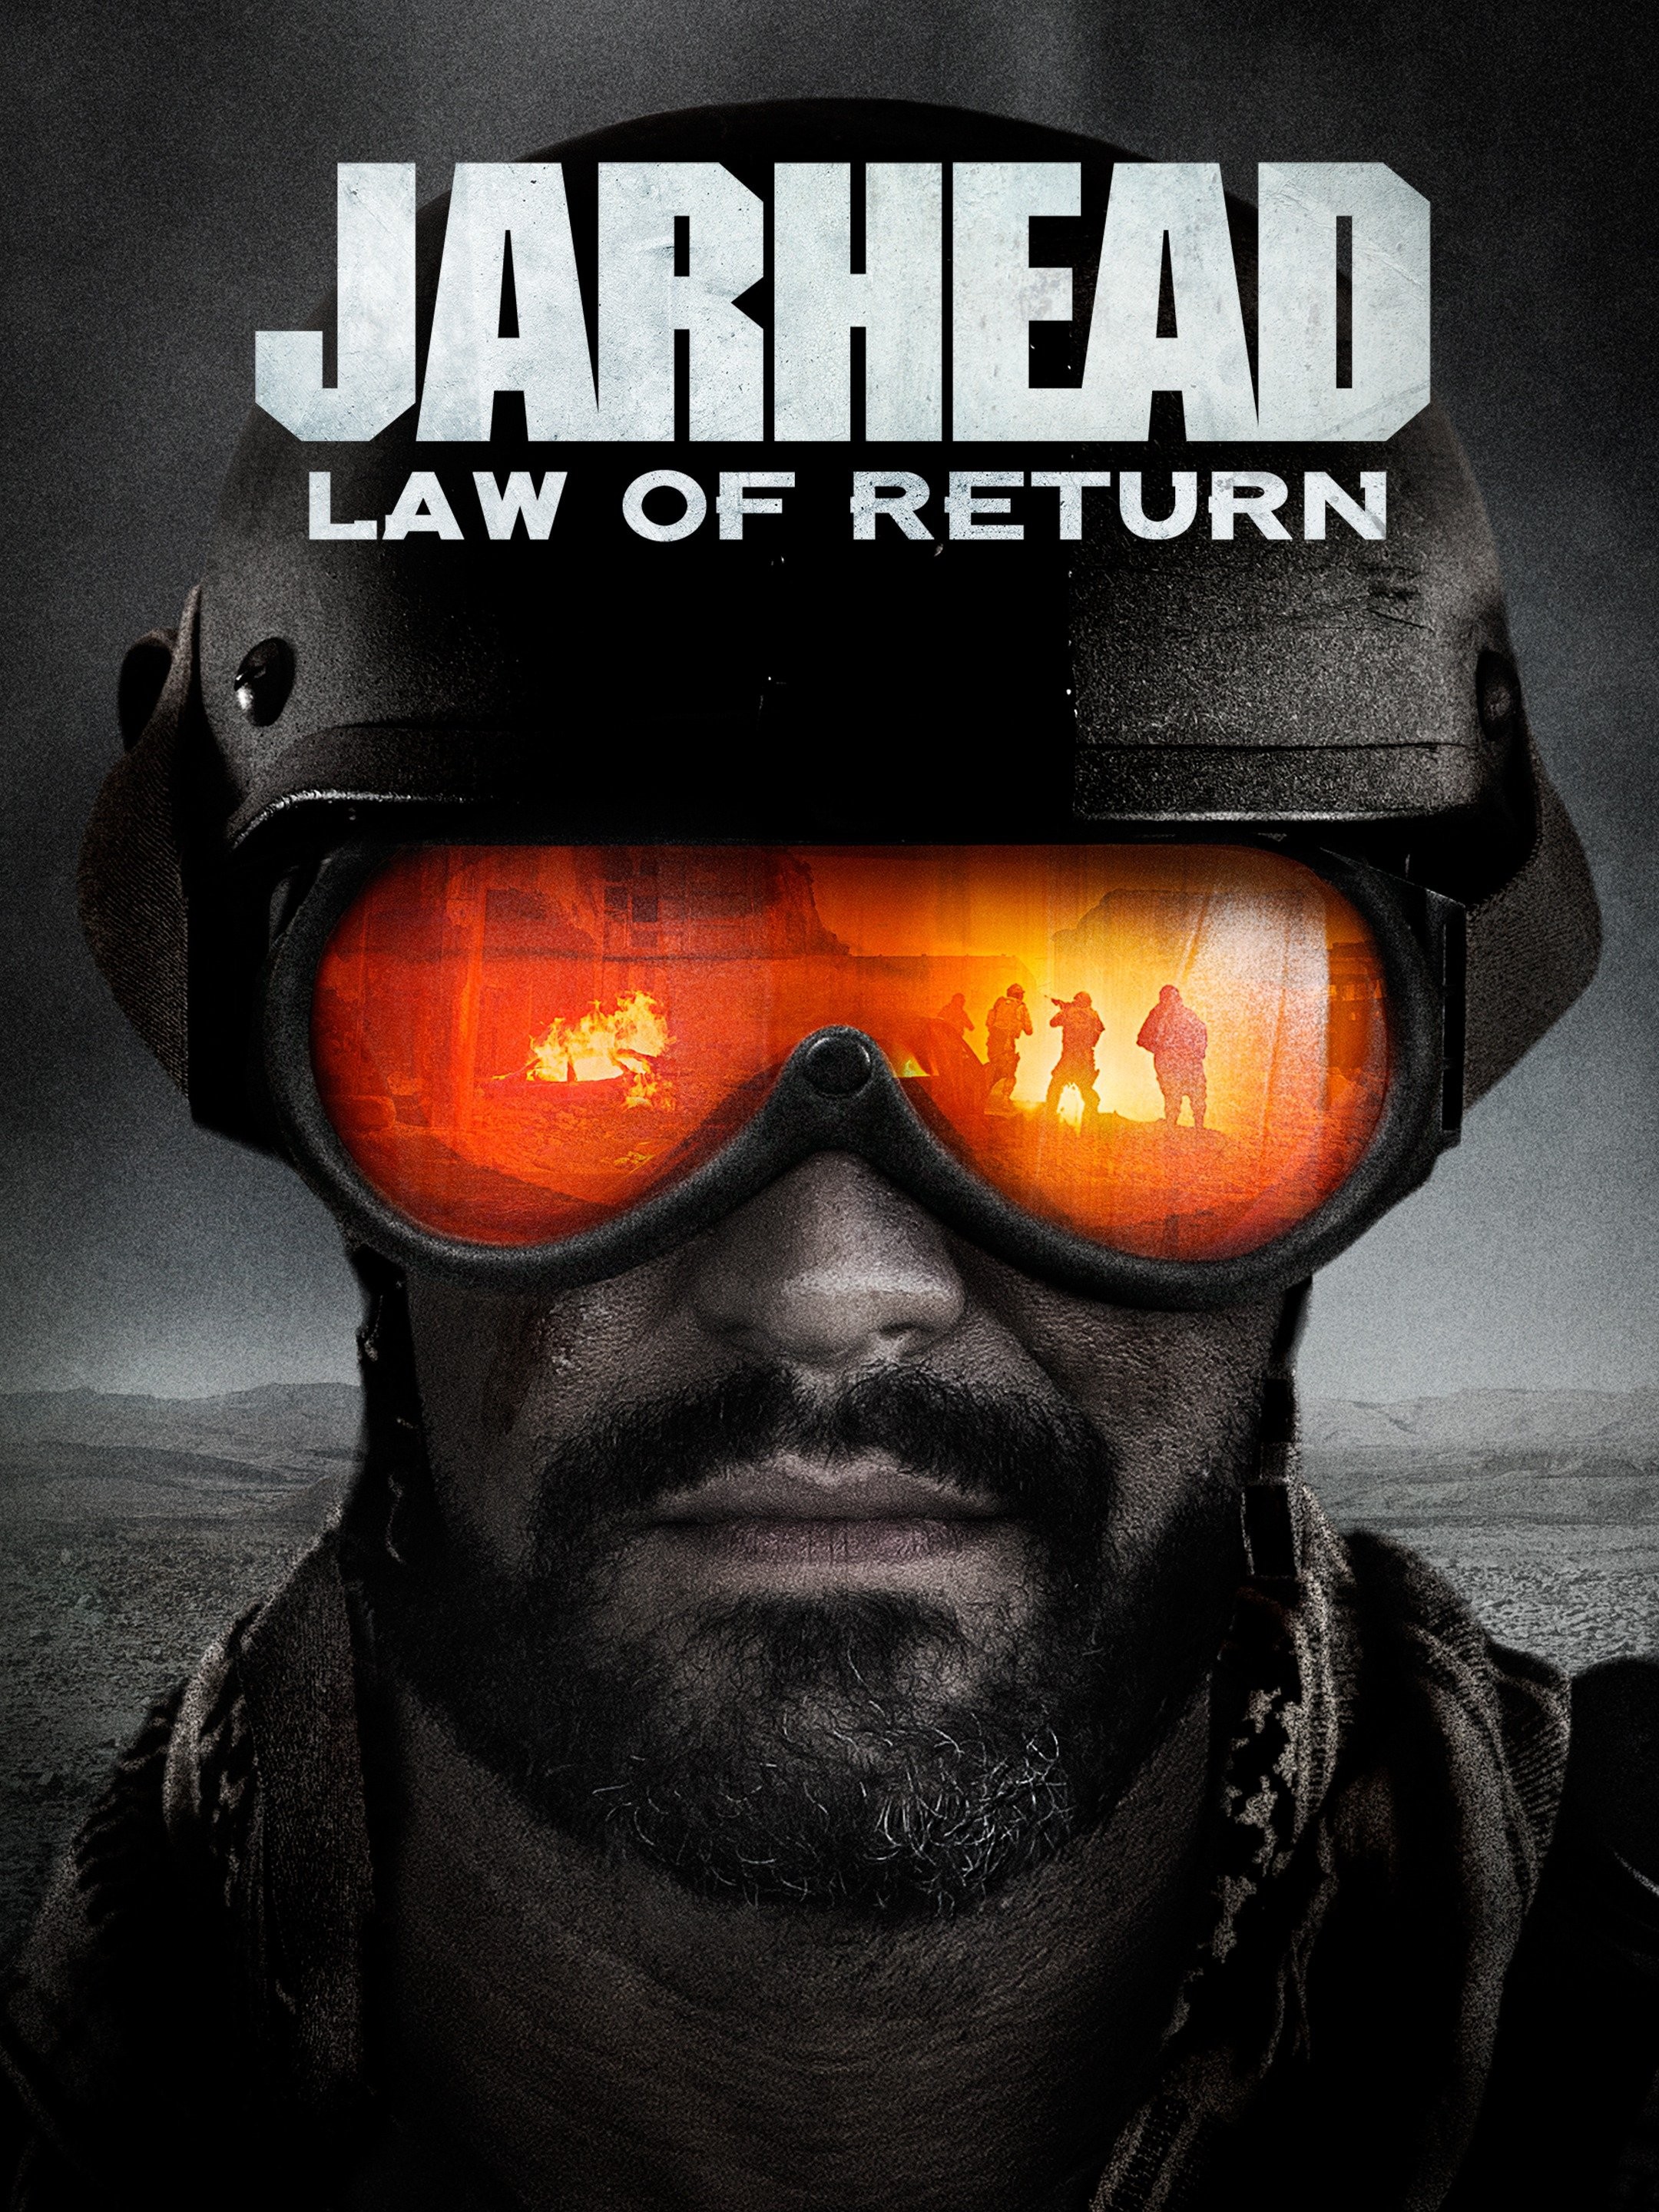 Jarhead law of return review